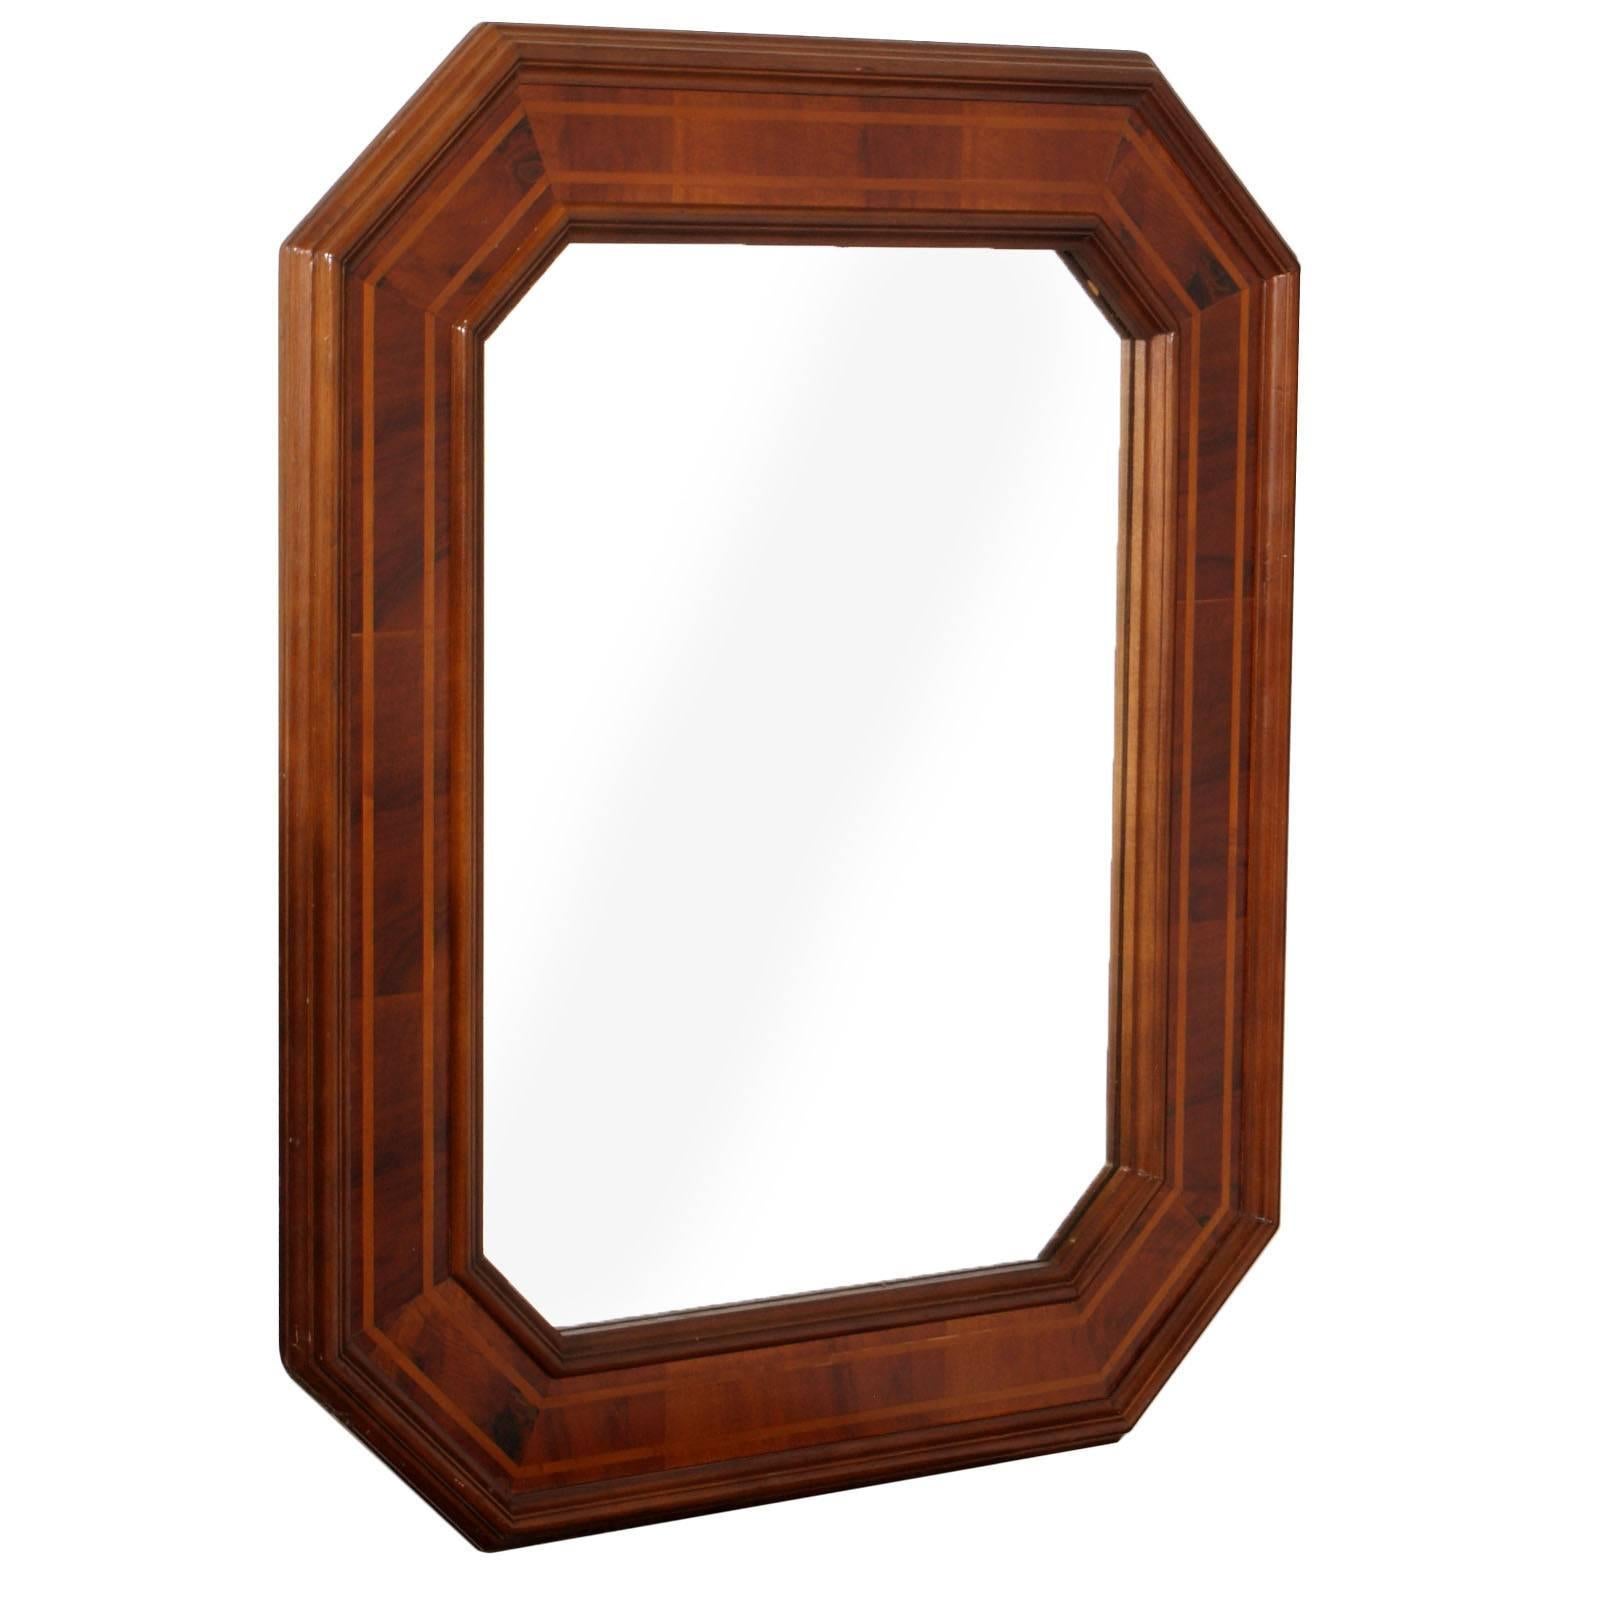 Neoclassical  Octagonal Mirror with Frame in veneered Walnut Beech tree inlaid